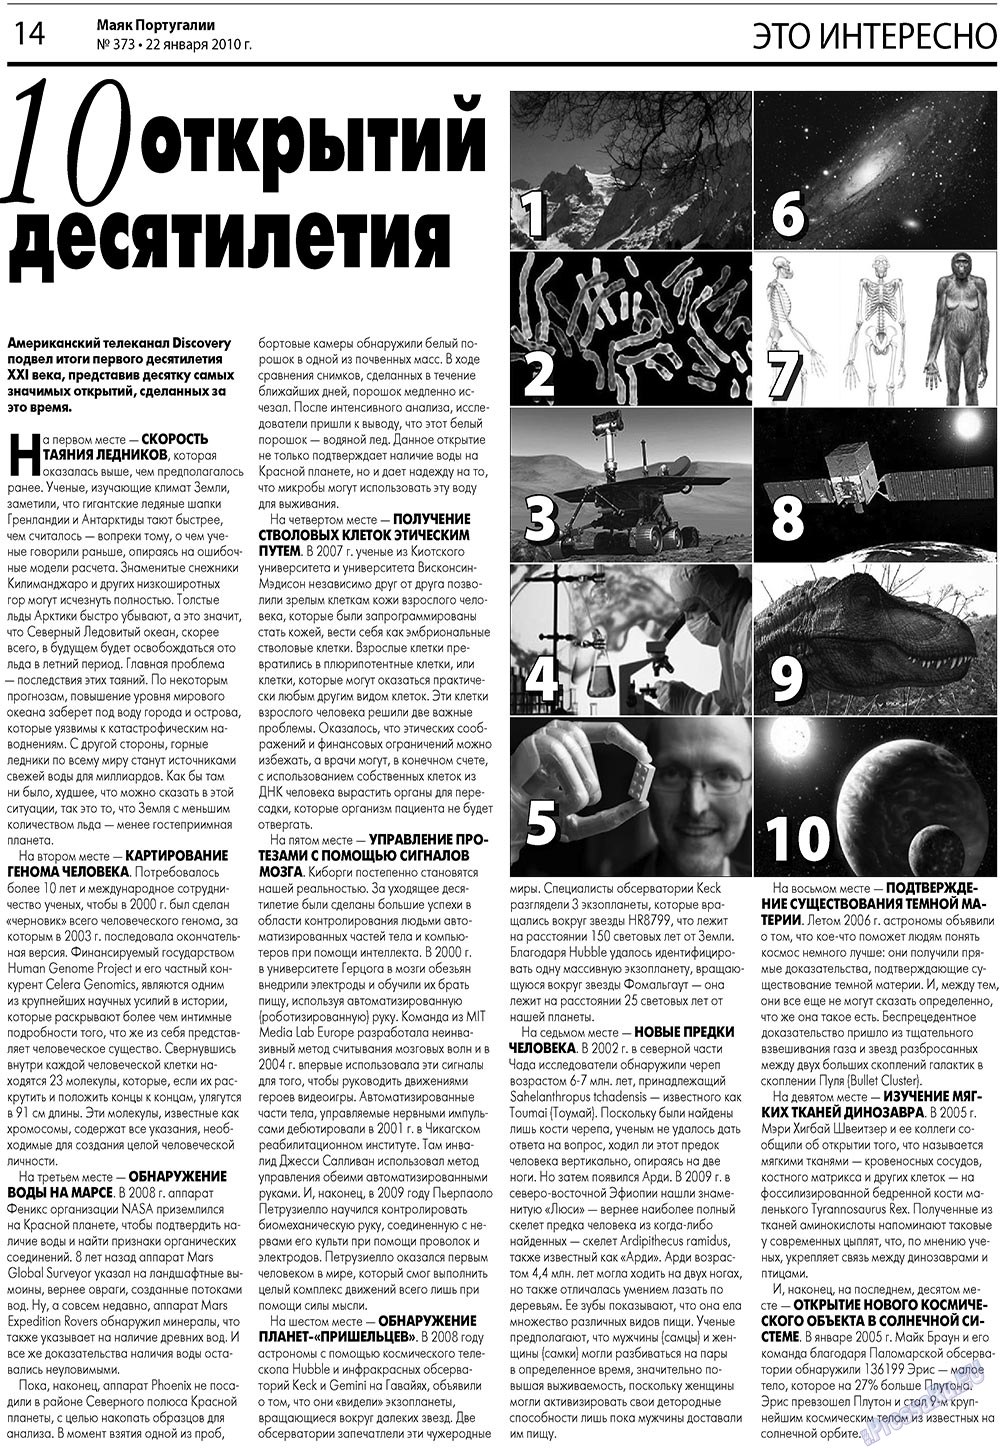 Маяк Португалии, газета. 2010 №373 стр.14